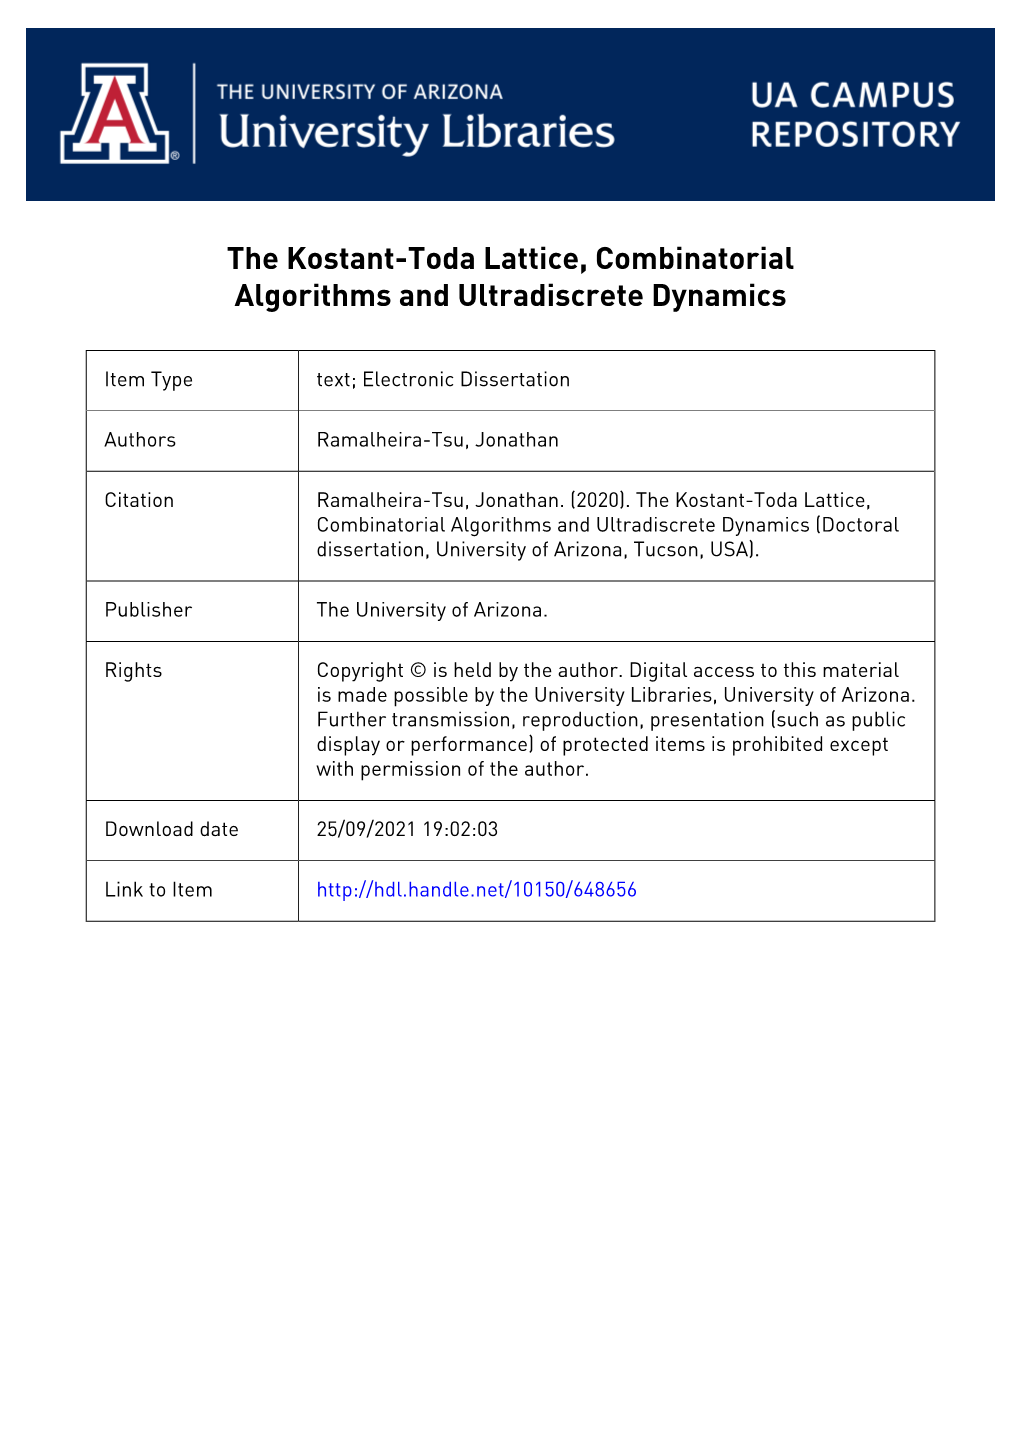 The Kostant-Toda Lattice, Combinatorial Algorithms and Ultradiscrete Dynamics